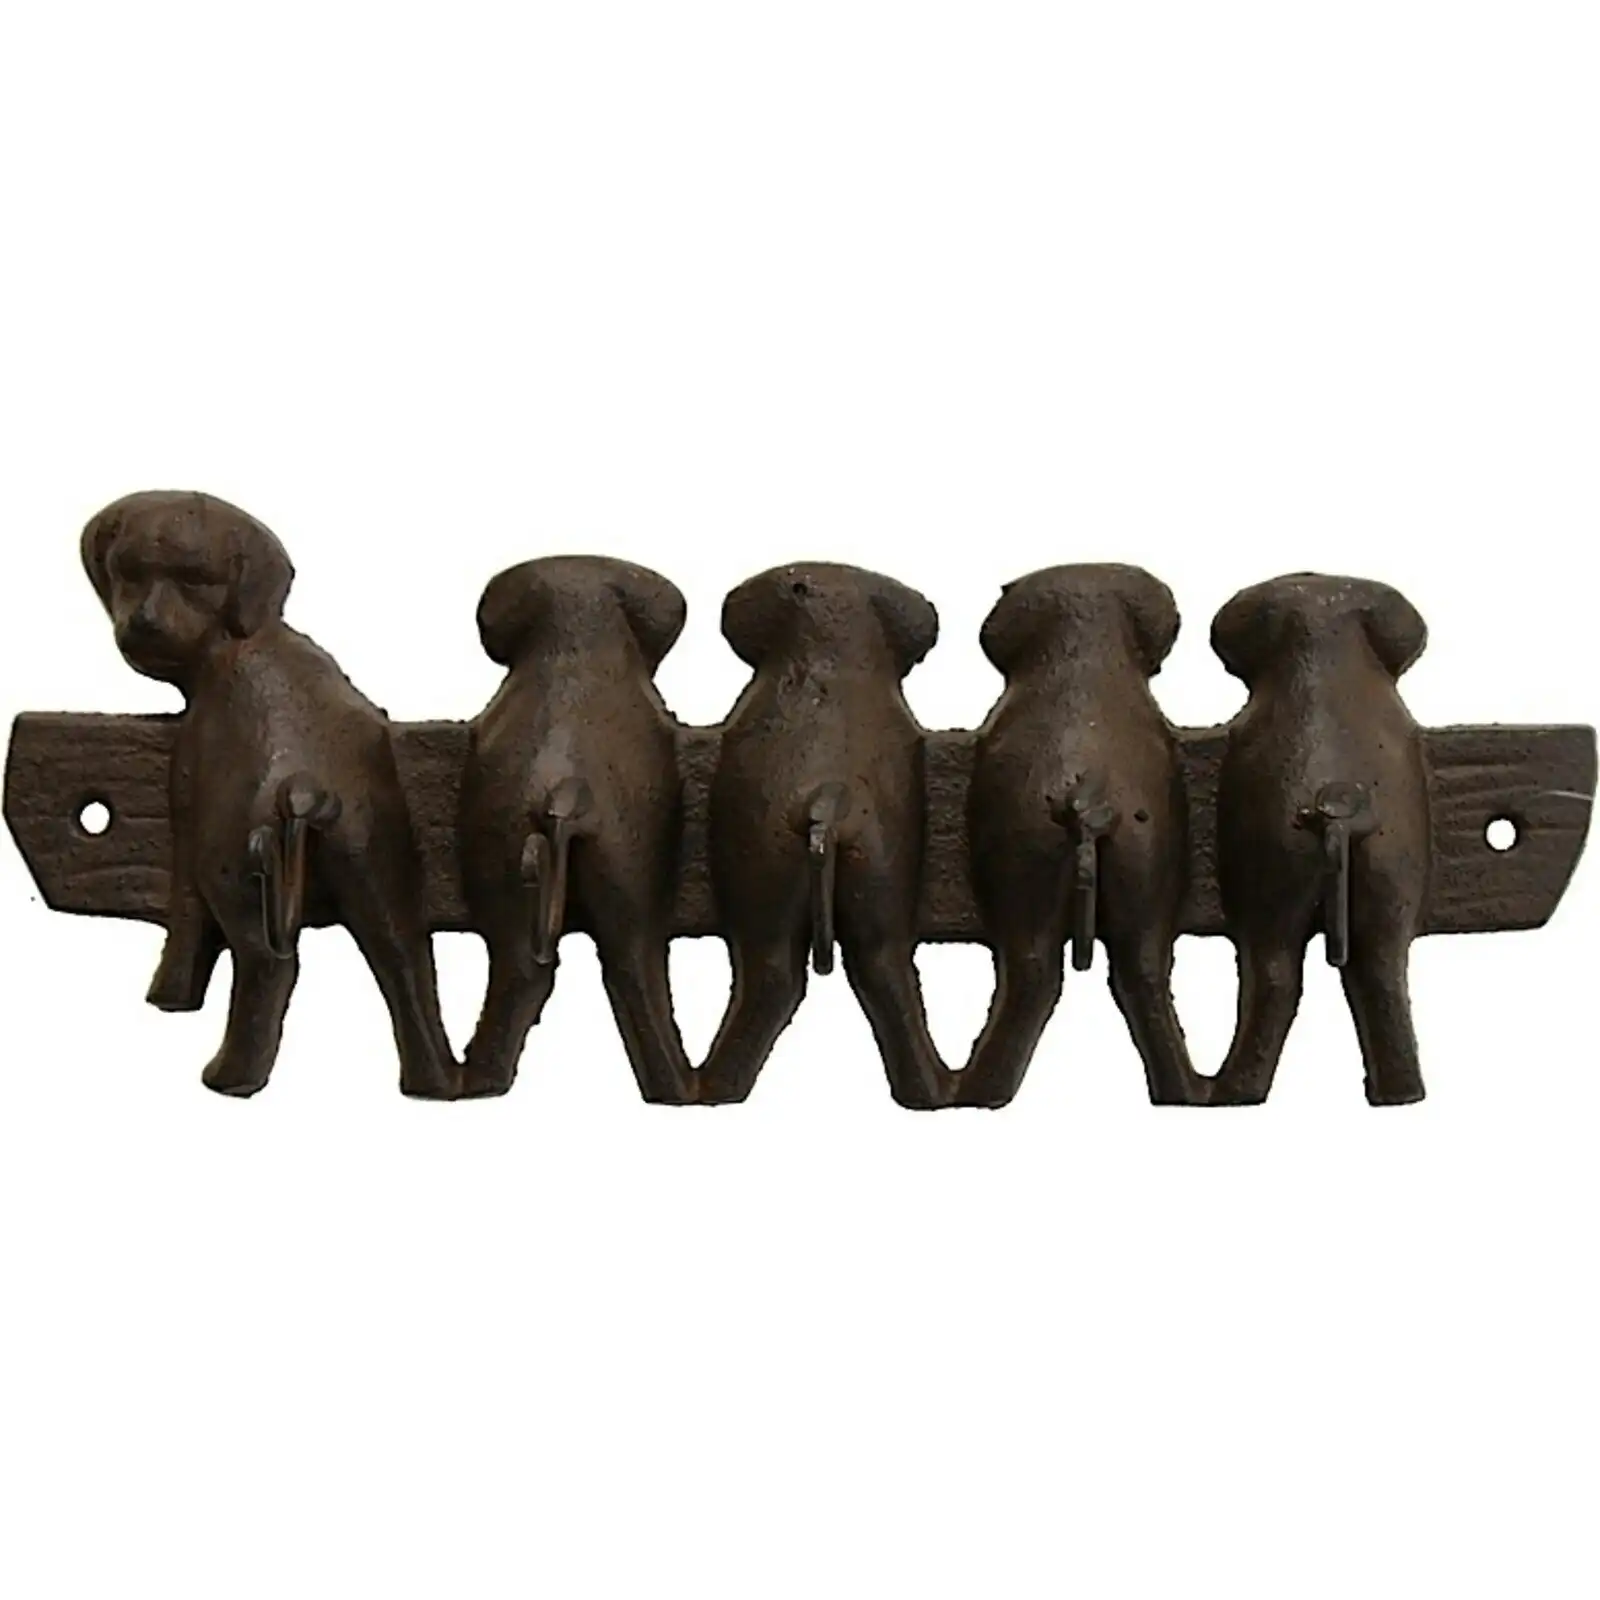 Dogs Metal Hook 28cm Wall Mounted Key/Clothes Organiser Hanger/Holder Home Decor